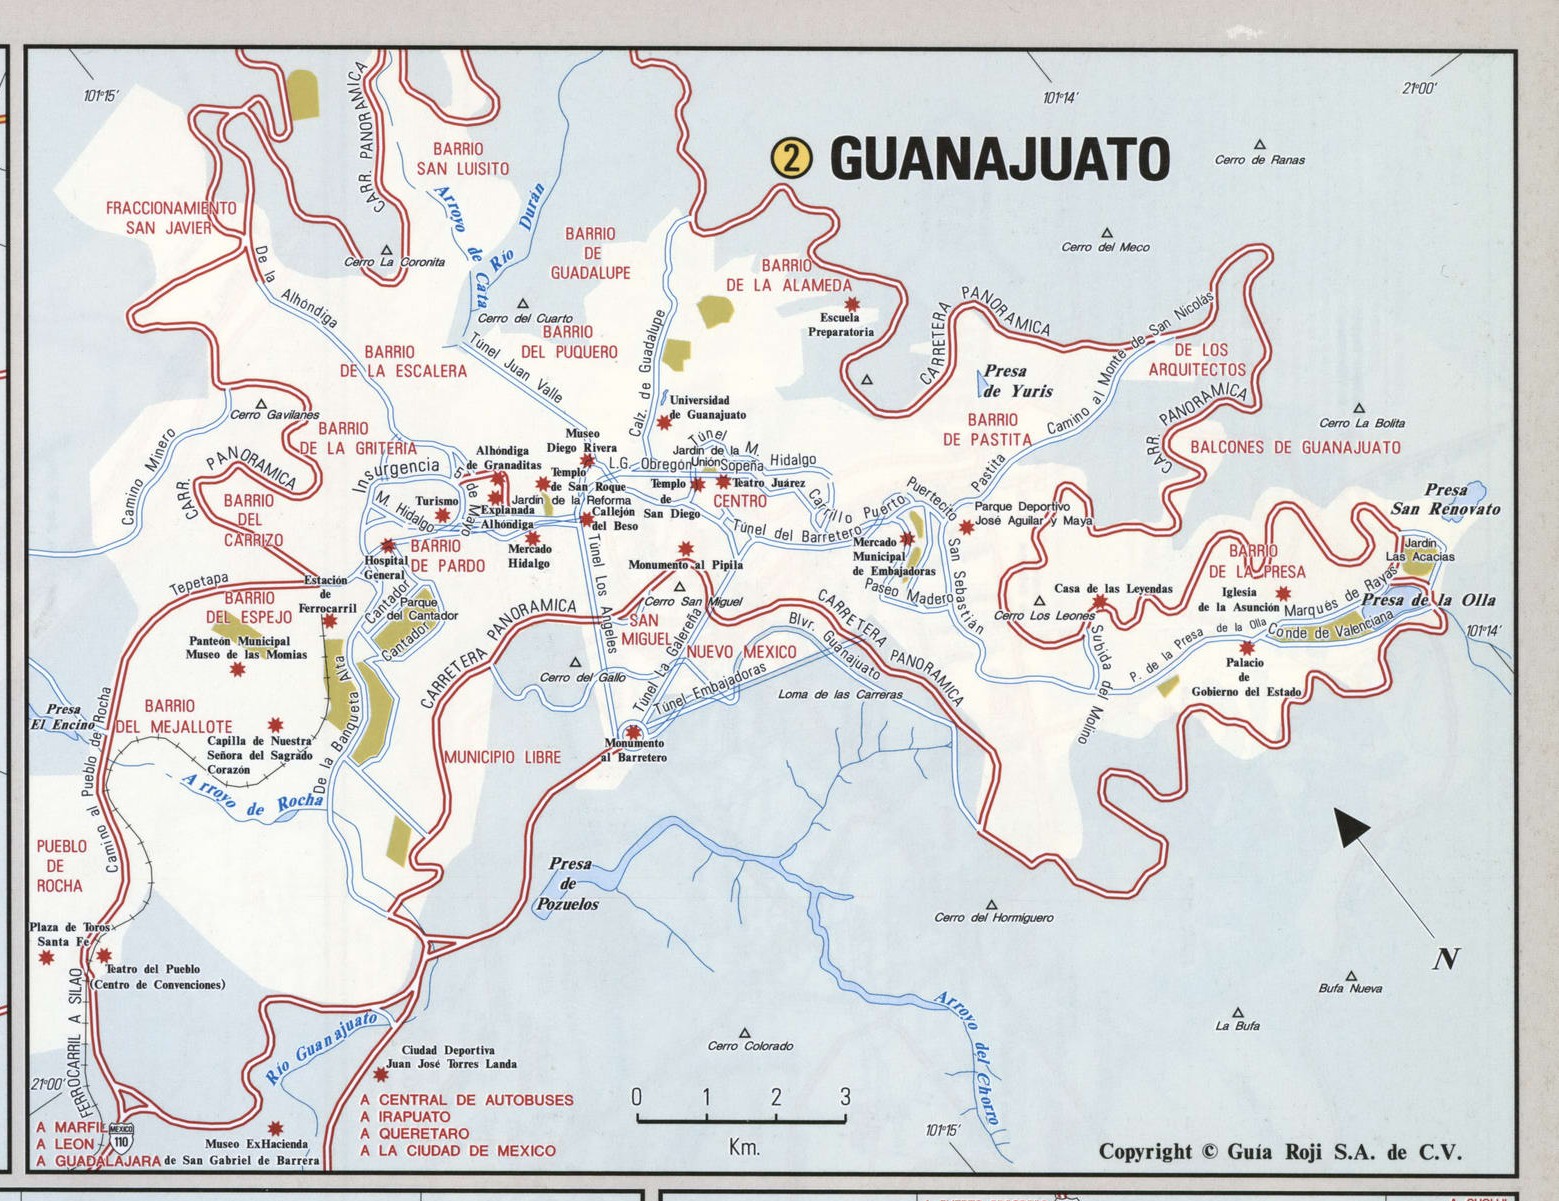 Guanajuato city map